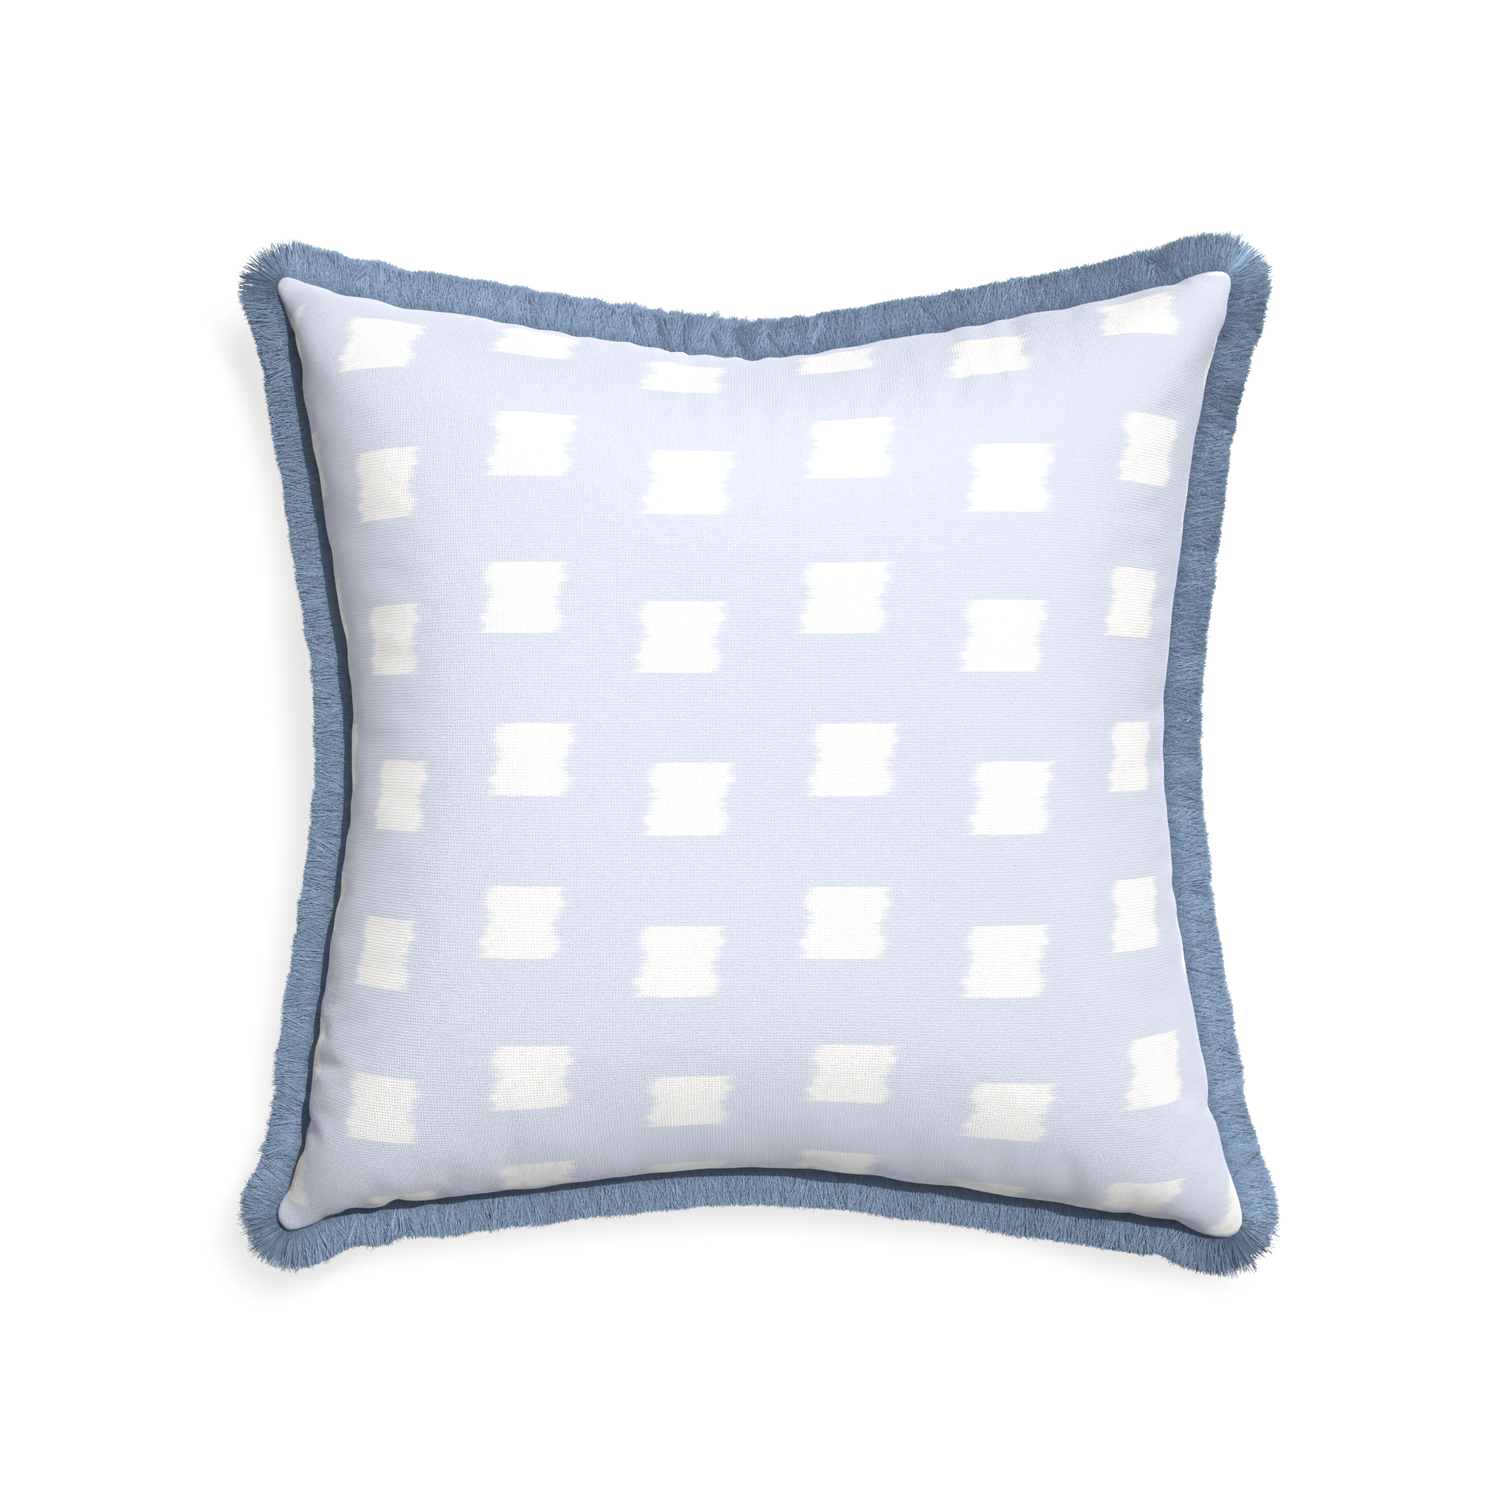 22-square denton custom pillow with sky fringe on white background